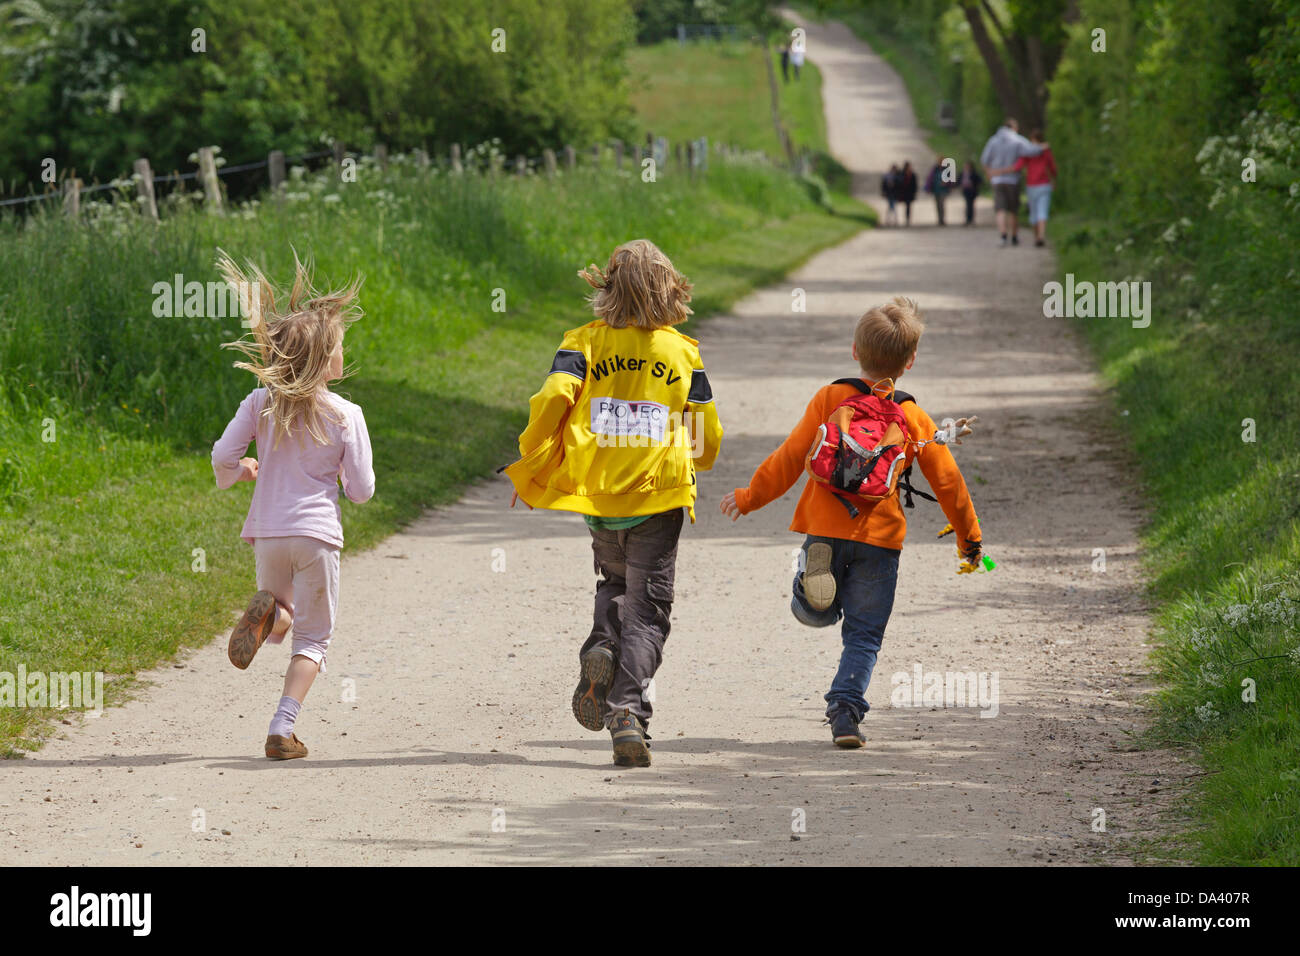 three children running along a path Stock Photo